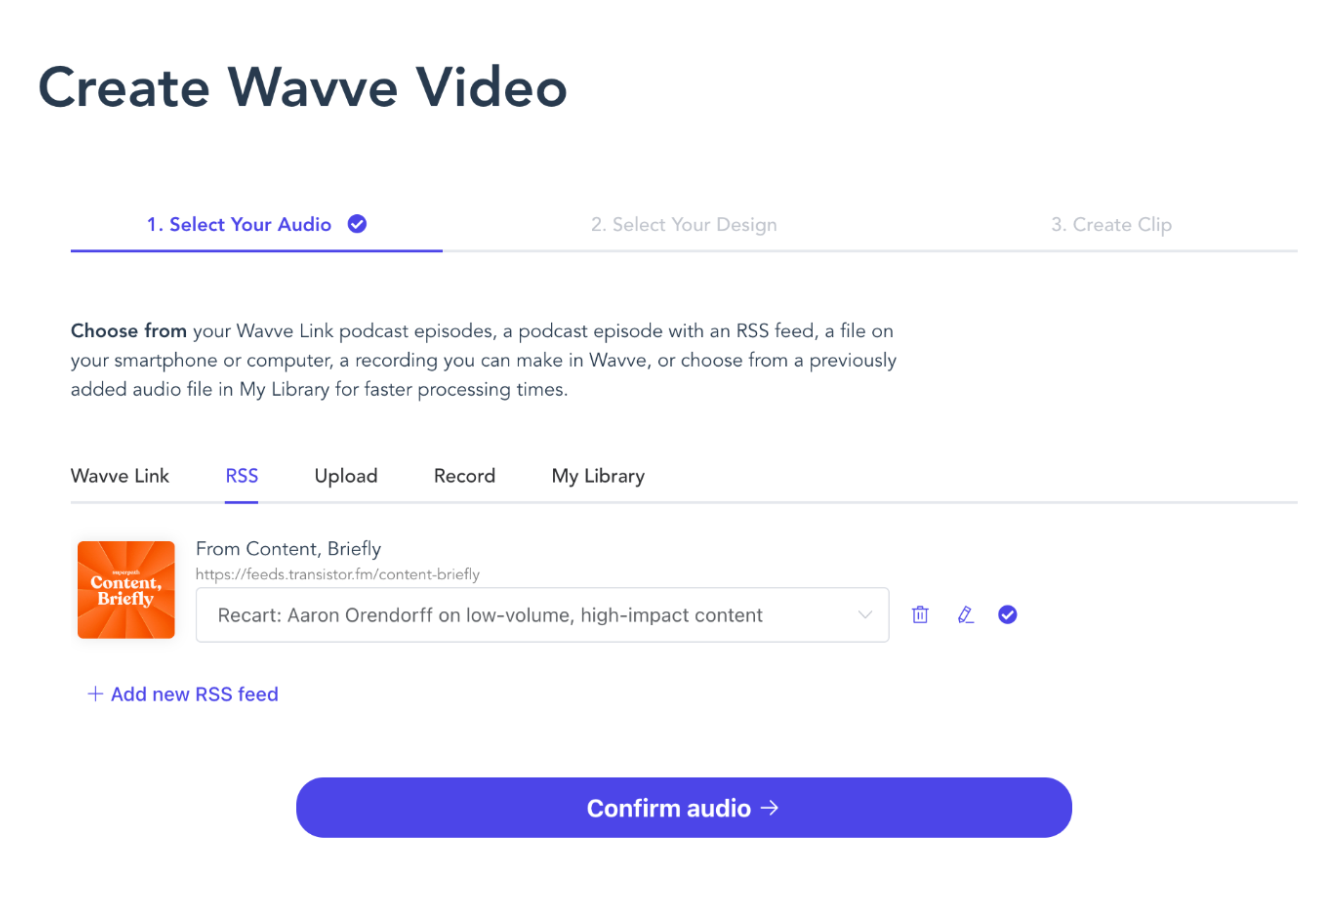 "Create Wavve Video" window